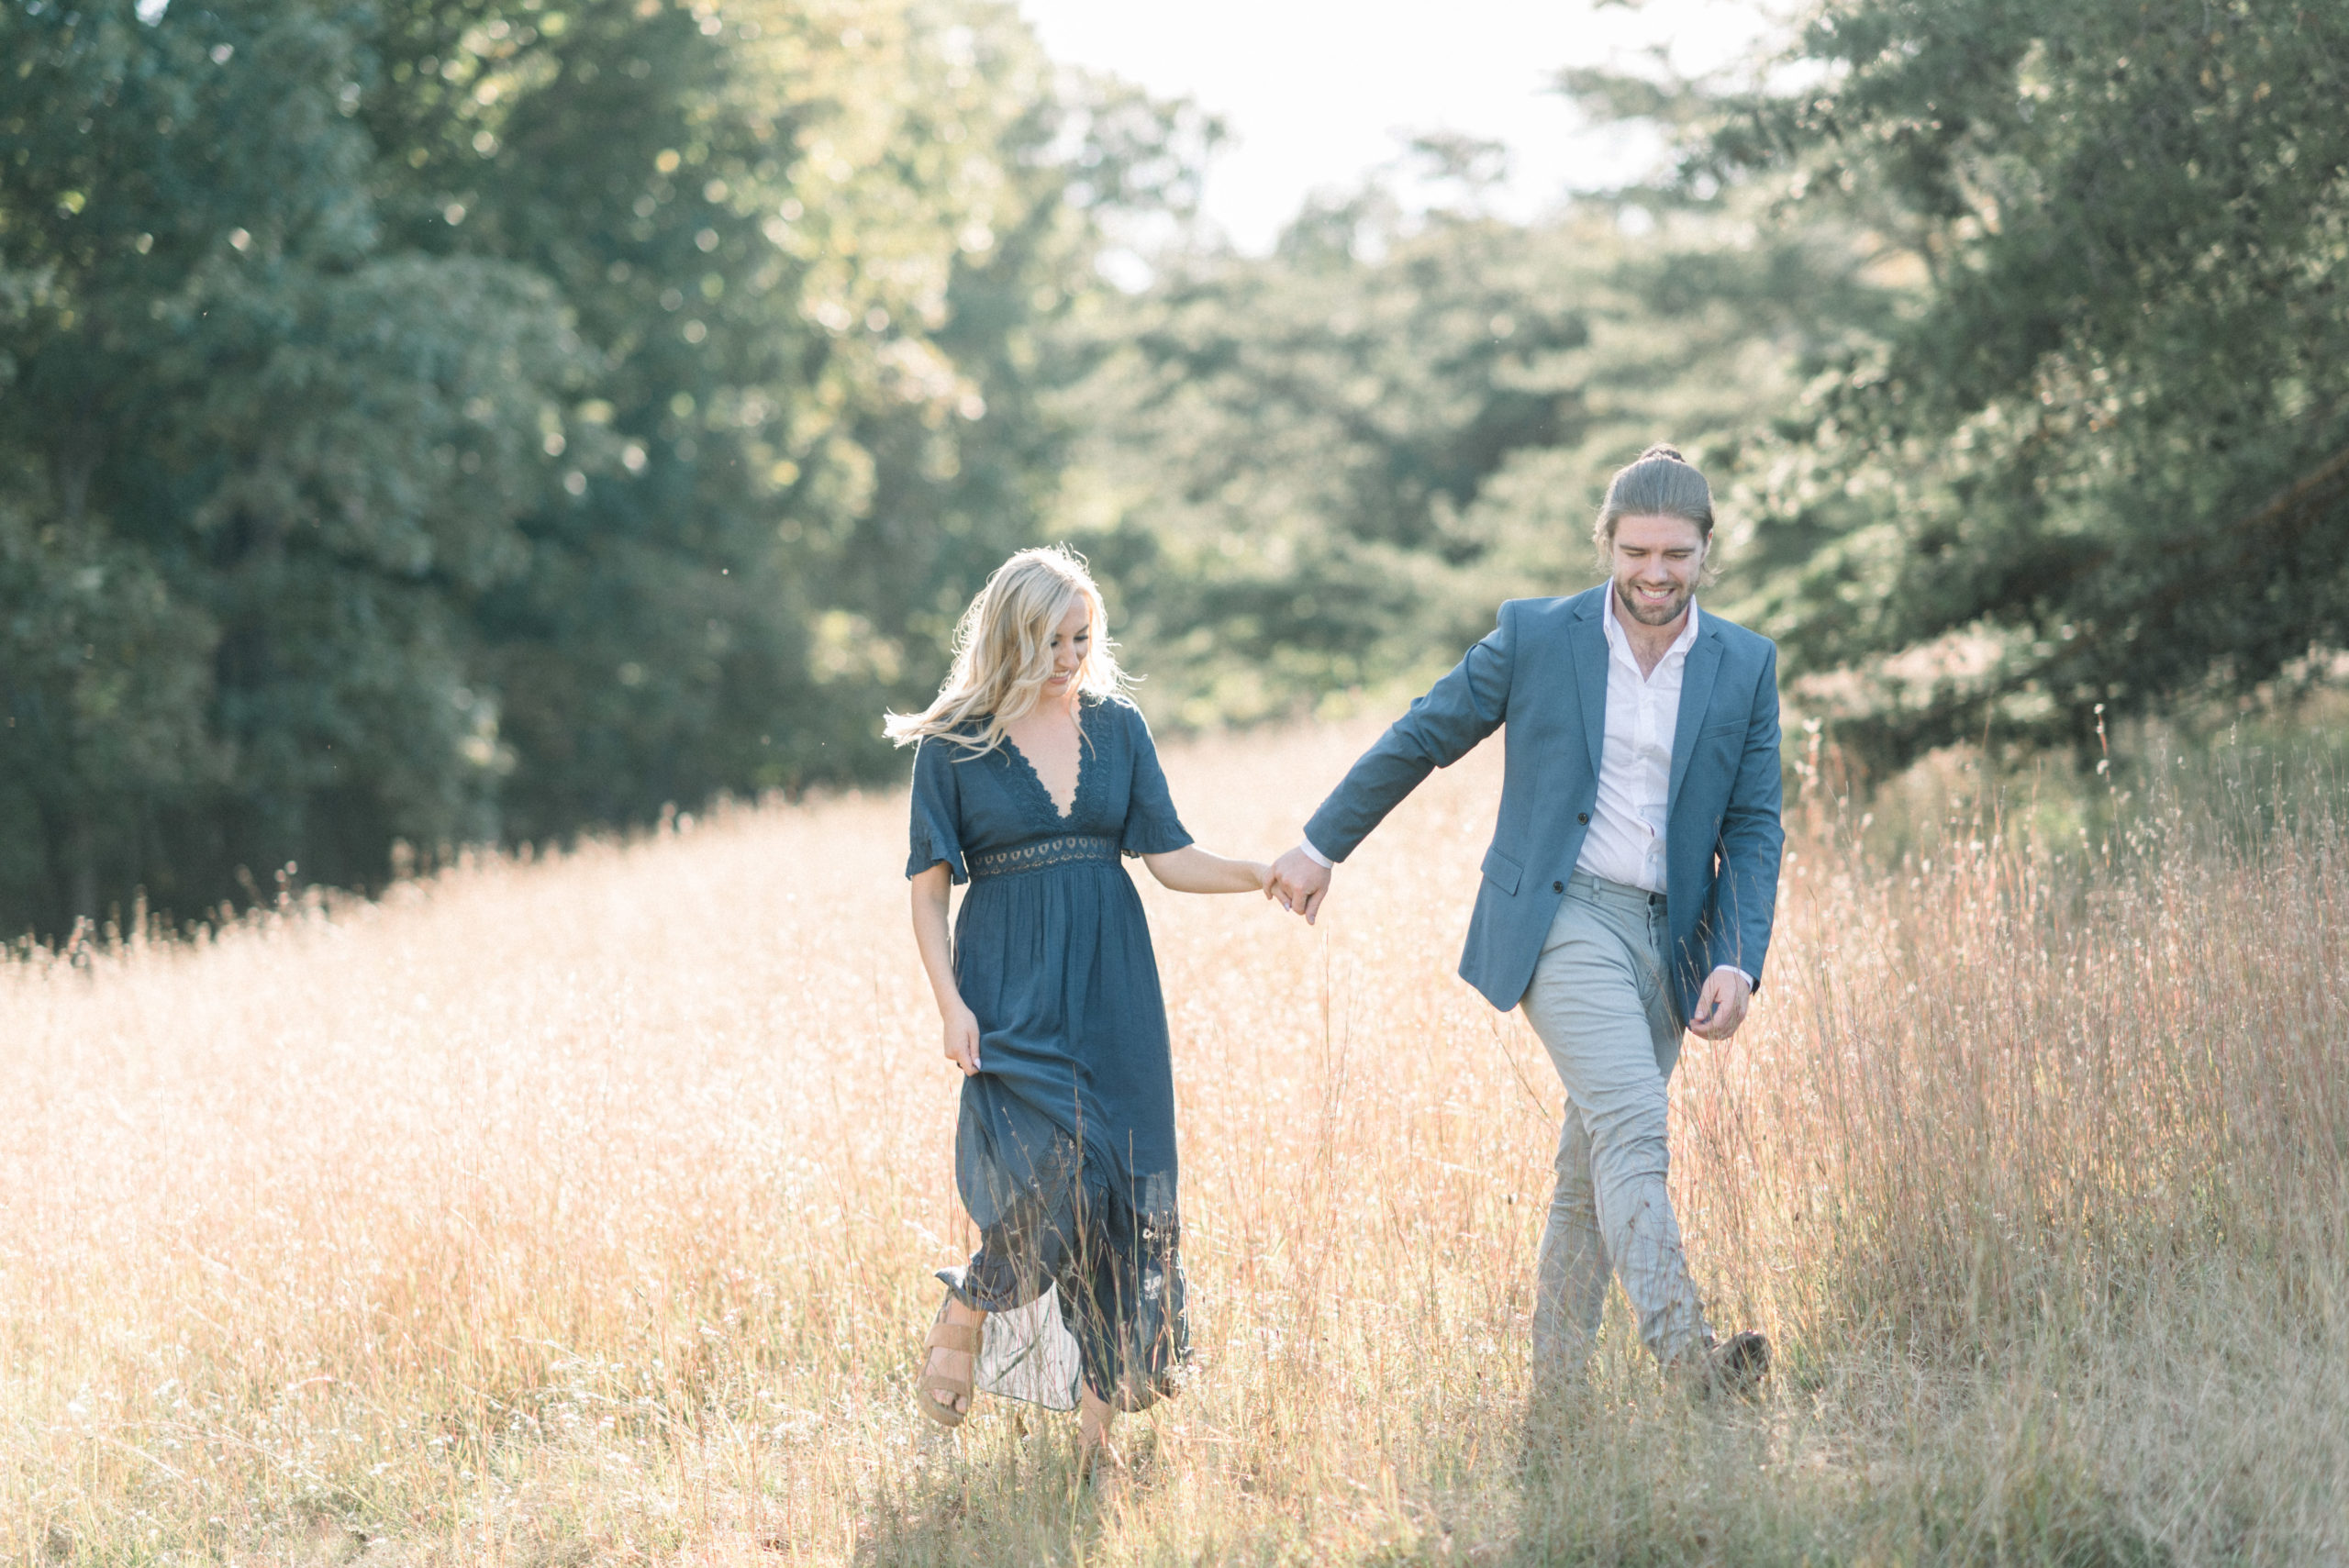 man and woman holding hands walking through field of golden grass